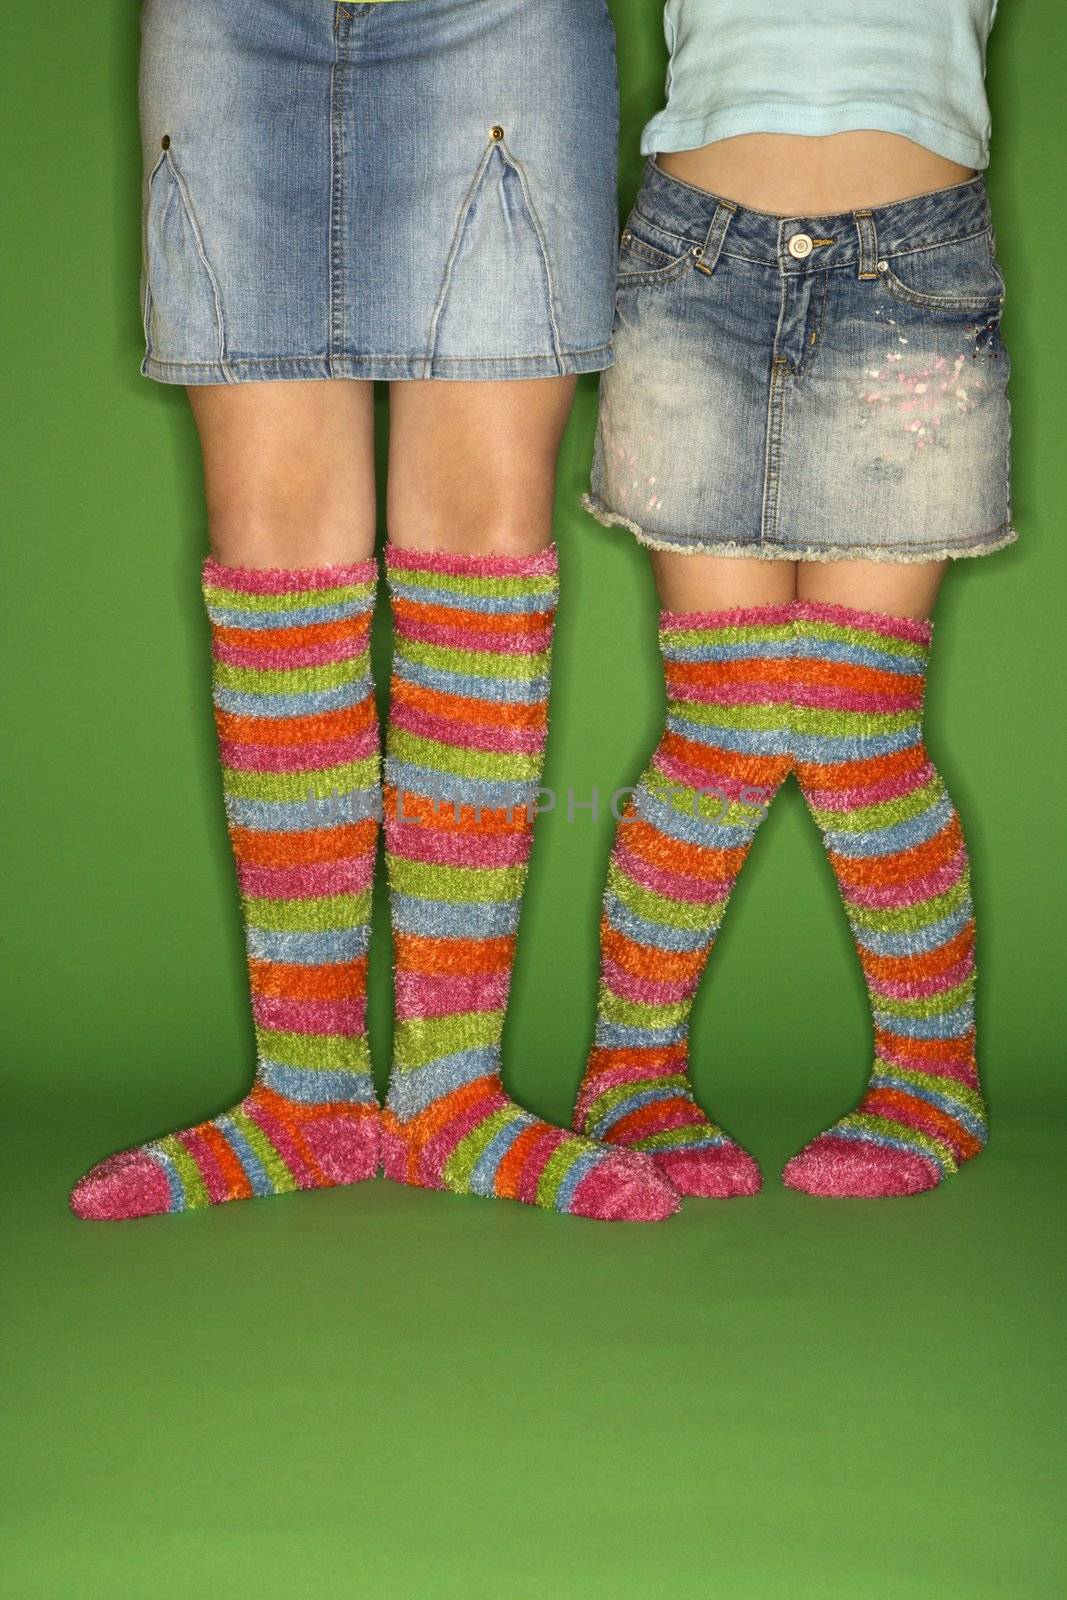 Caucasian female children wearing striped socks.